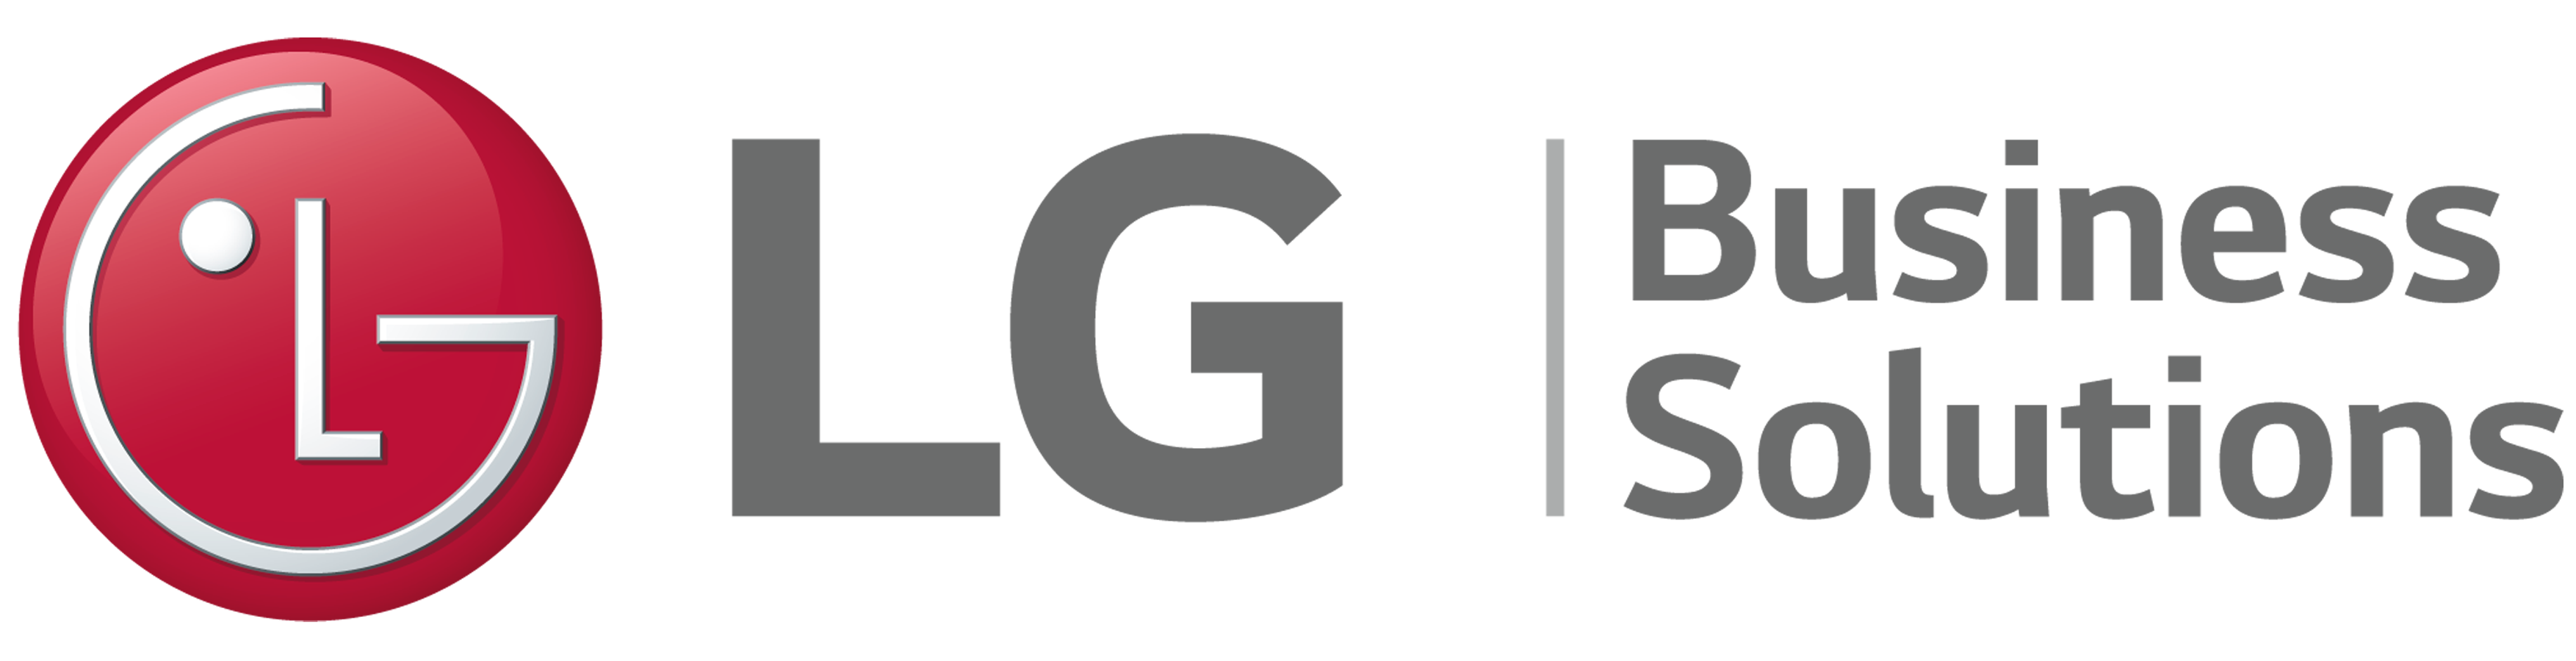 LG-1.png